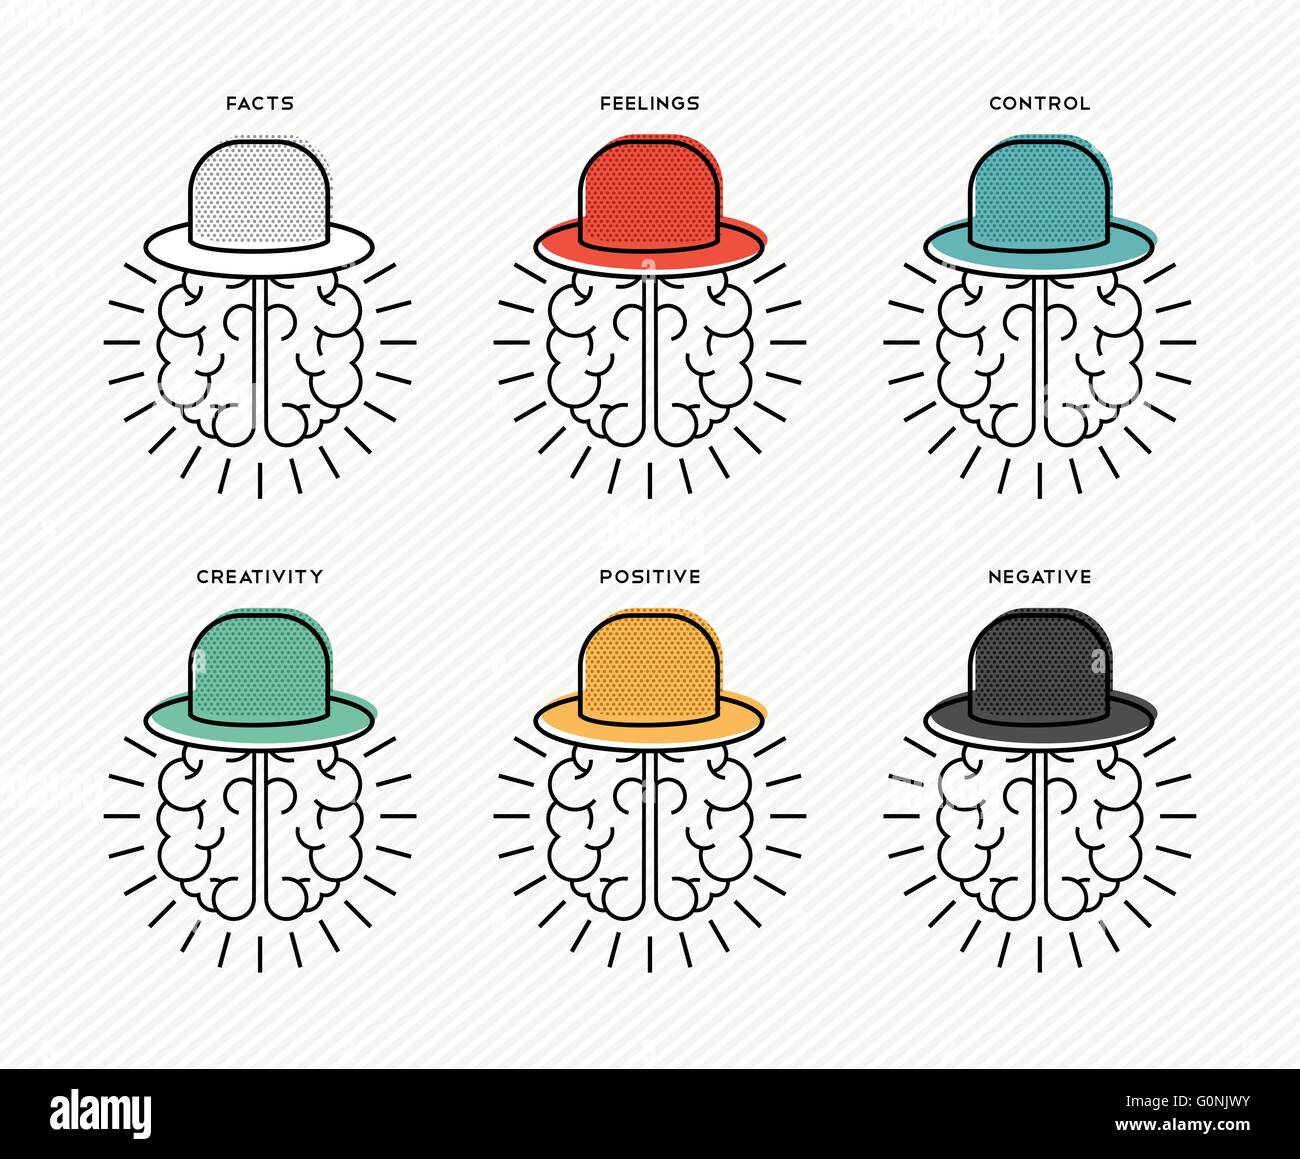 Sei pensando cappelli il brainstorming concept design, cervelli umani indossando variopinti hat in linea stile d'arte. EPS10 vettore. Illustrazione Vettoriale